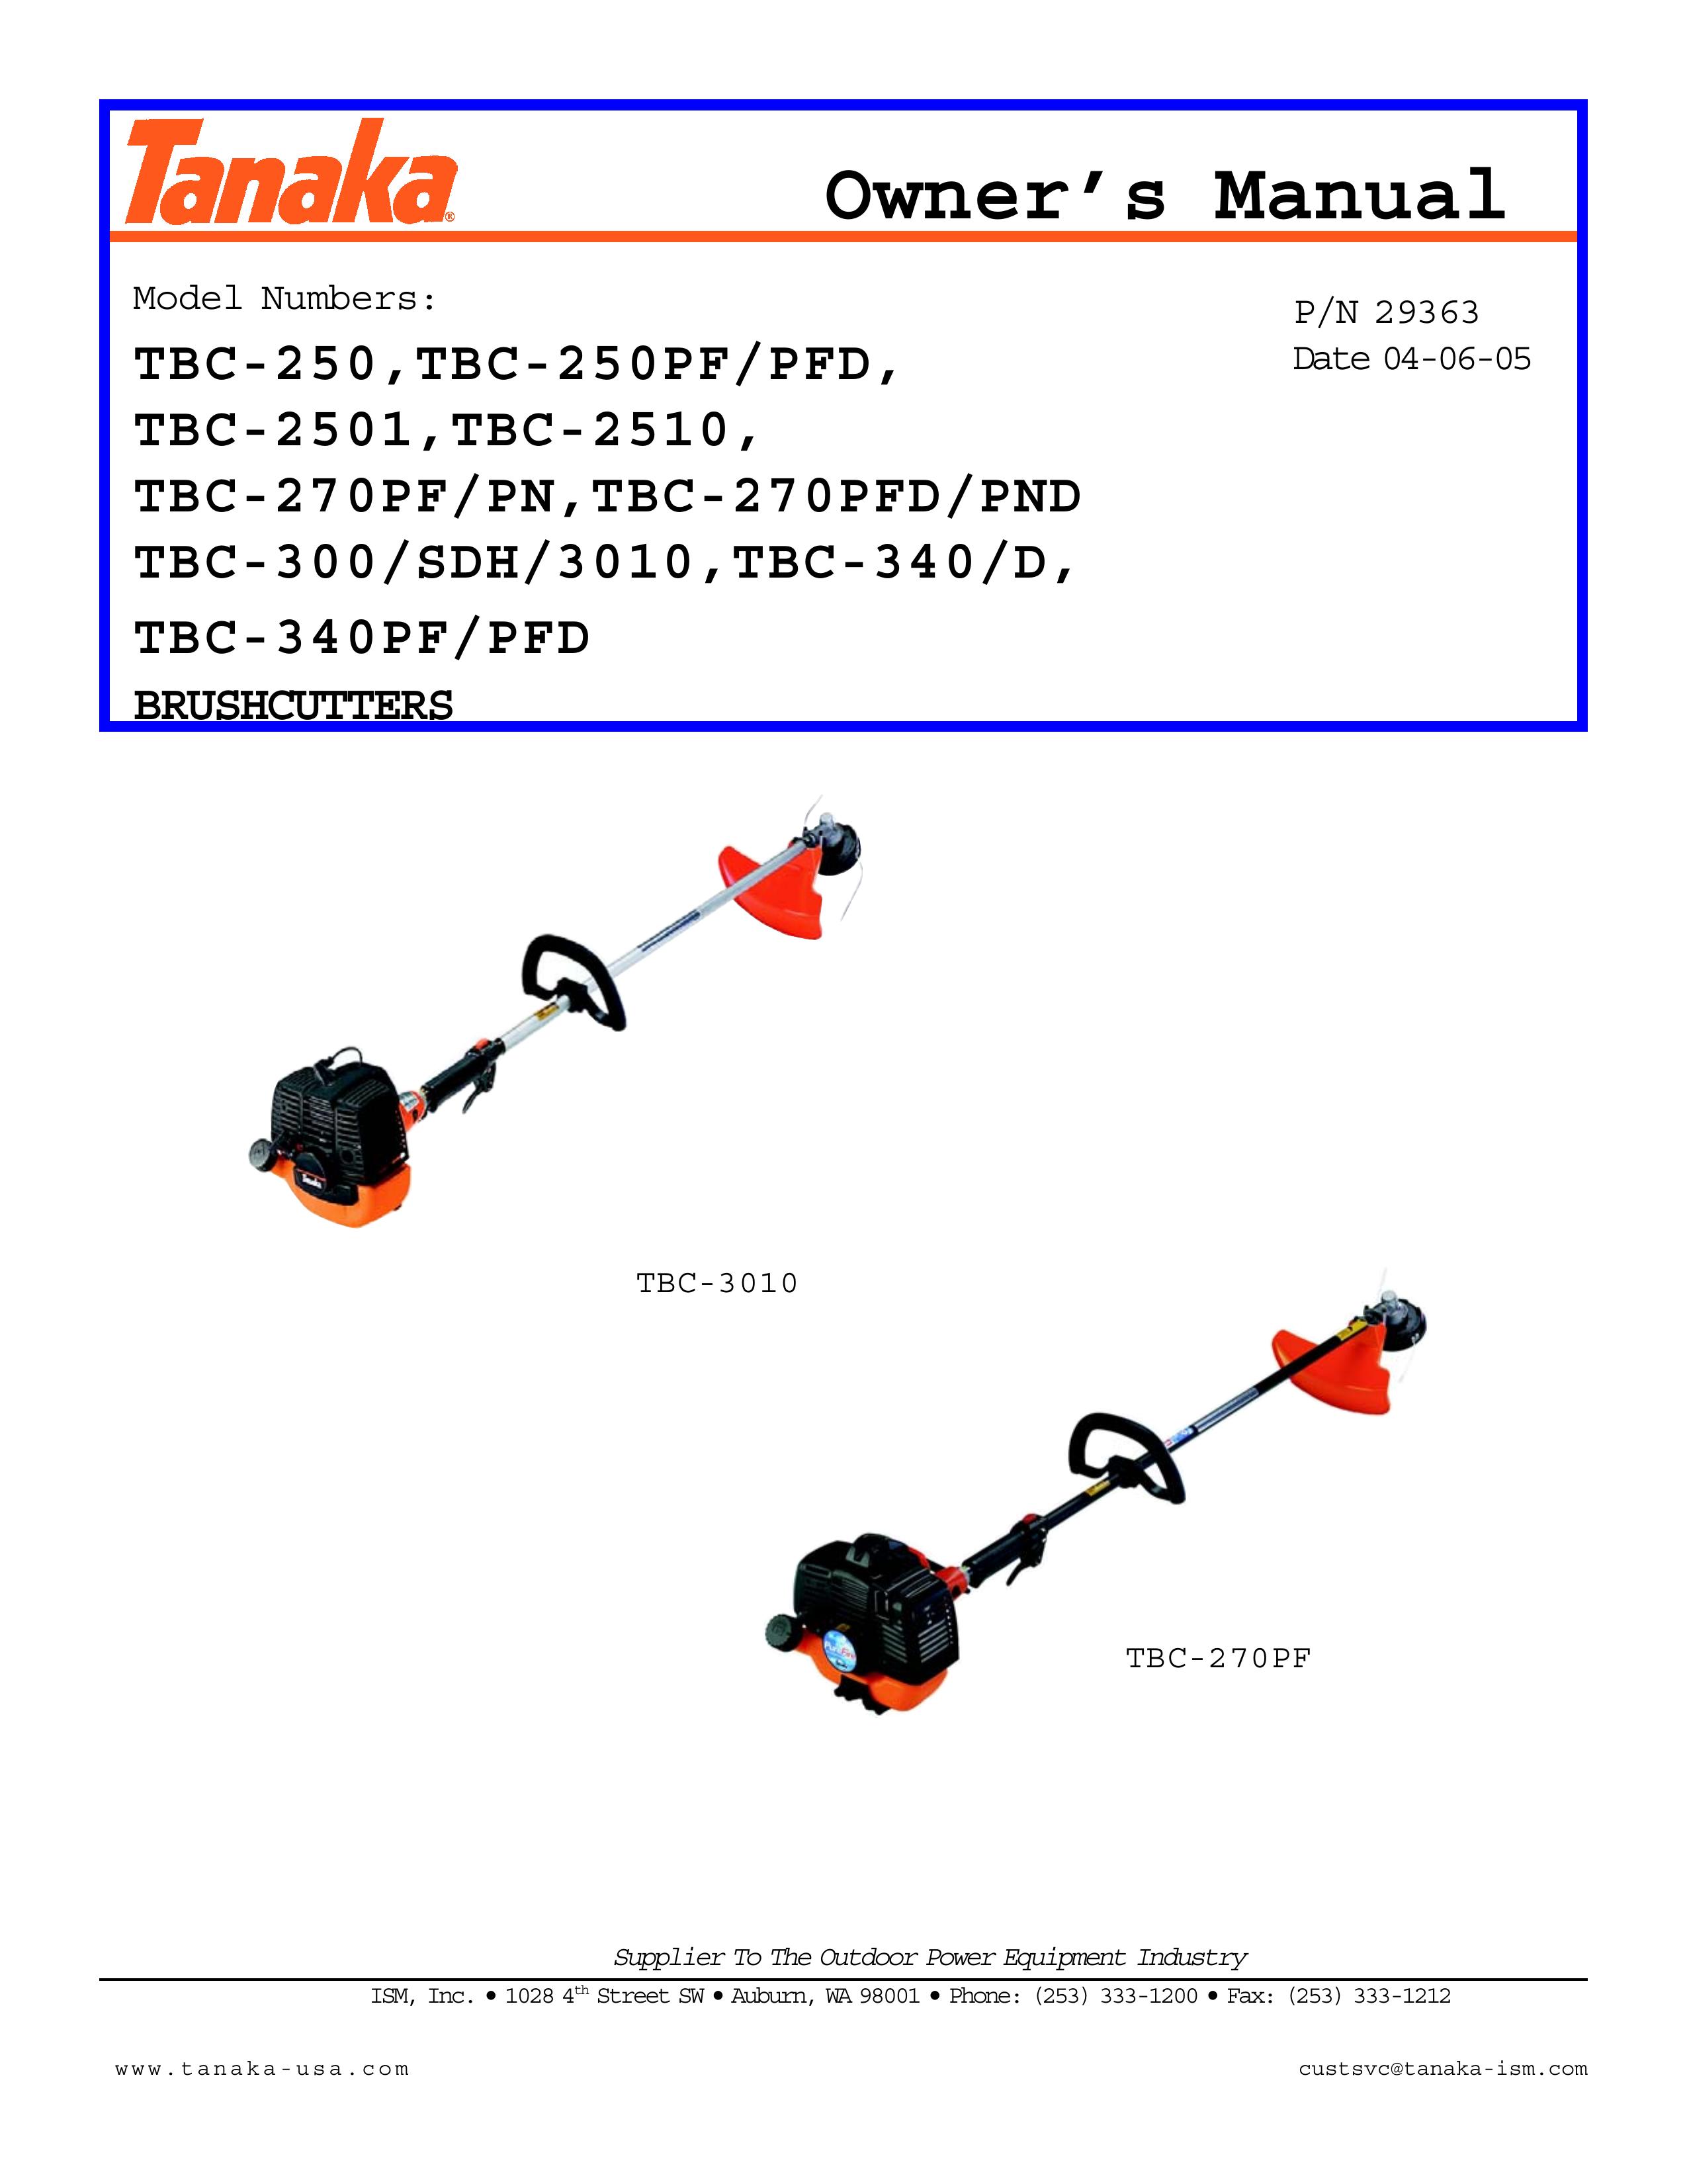 Tanaka TBC-340PF/PFD Brush Cutter User Manual